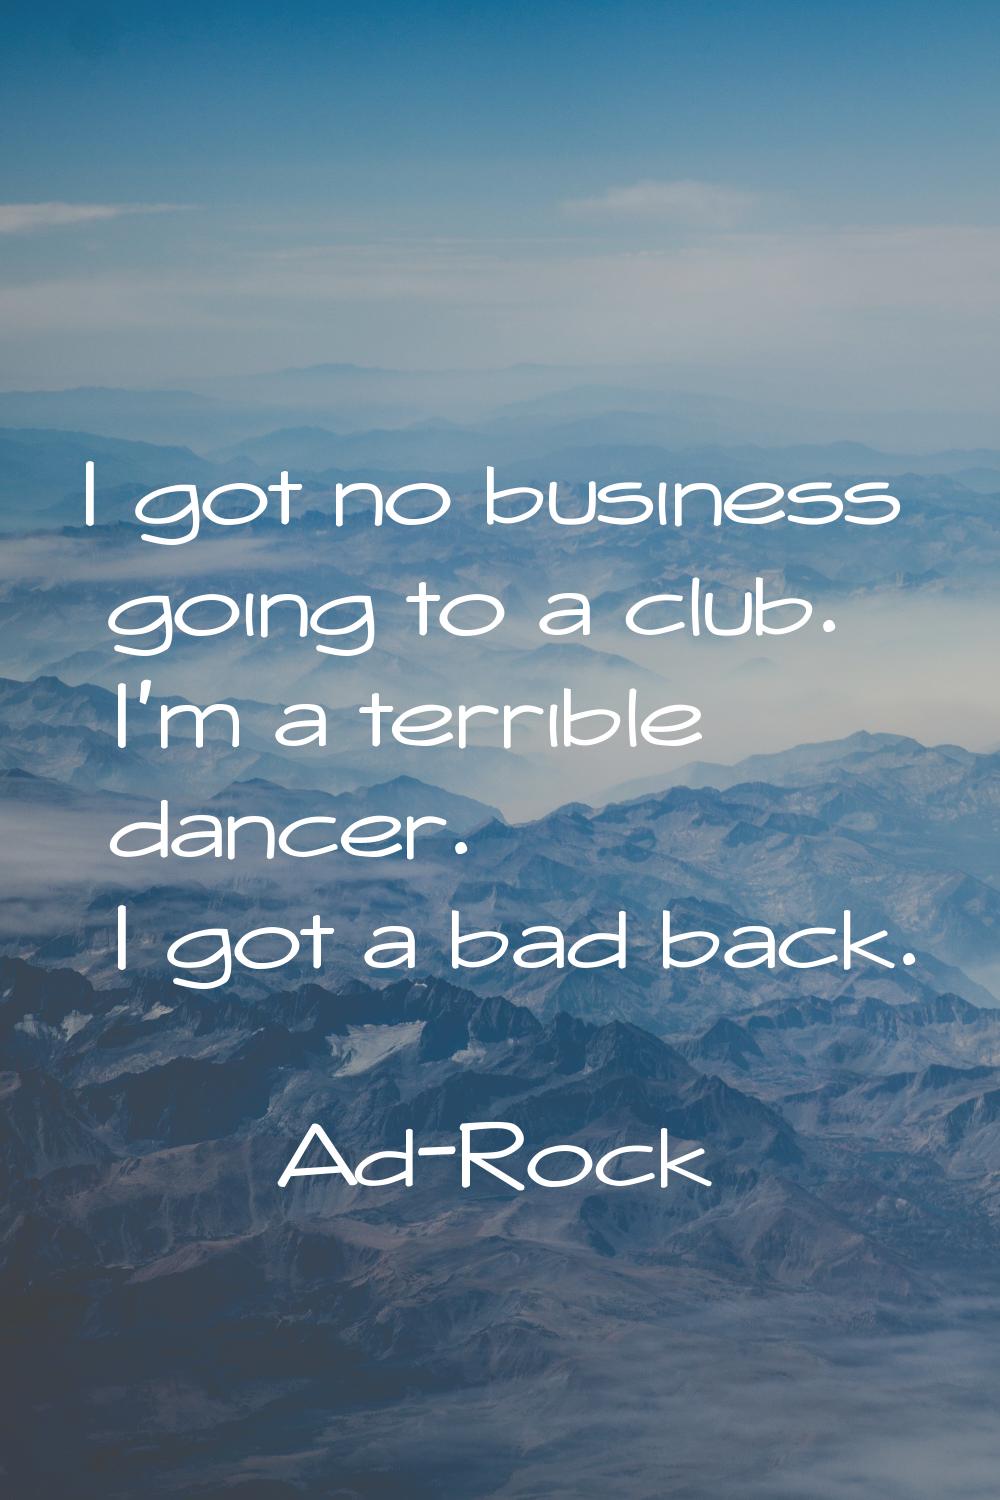 I got no business going to a club. I'm a terrible dancer. I got a bad back.